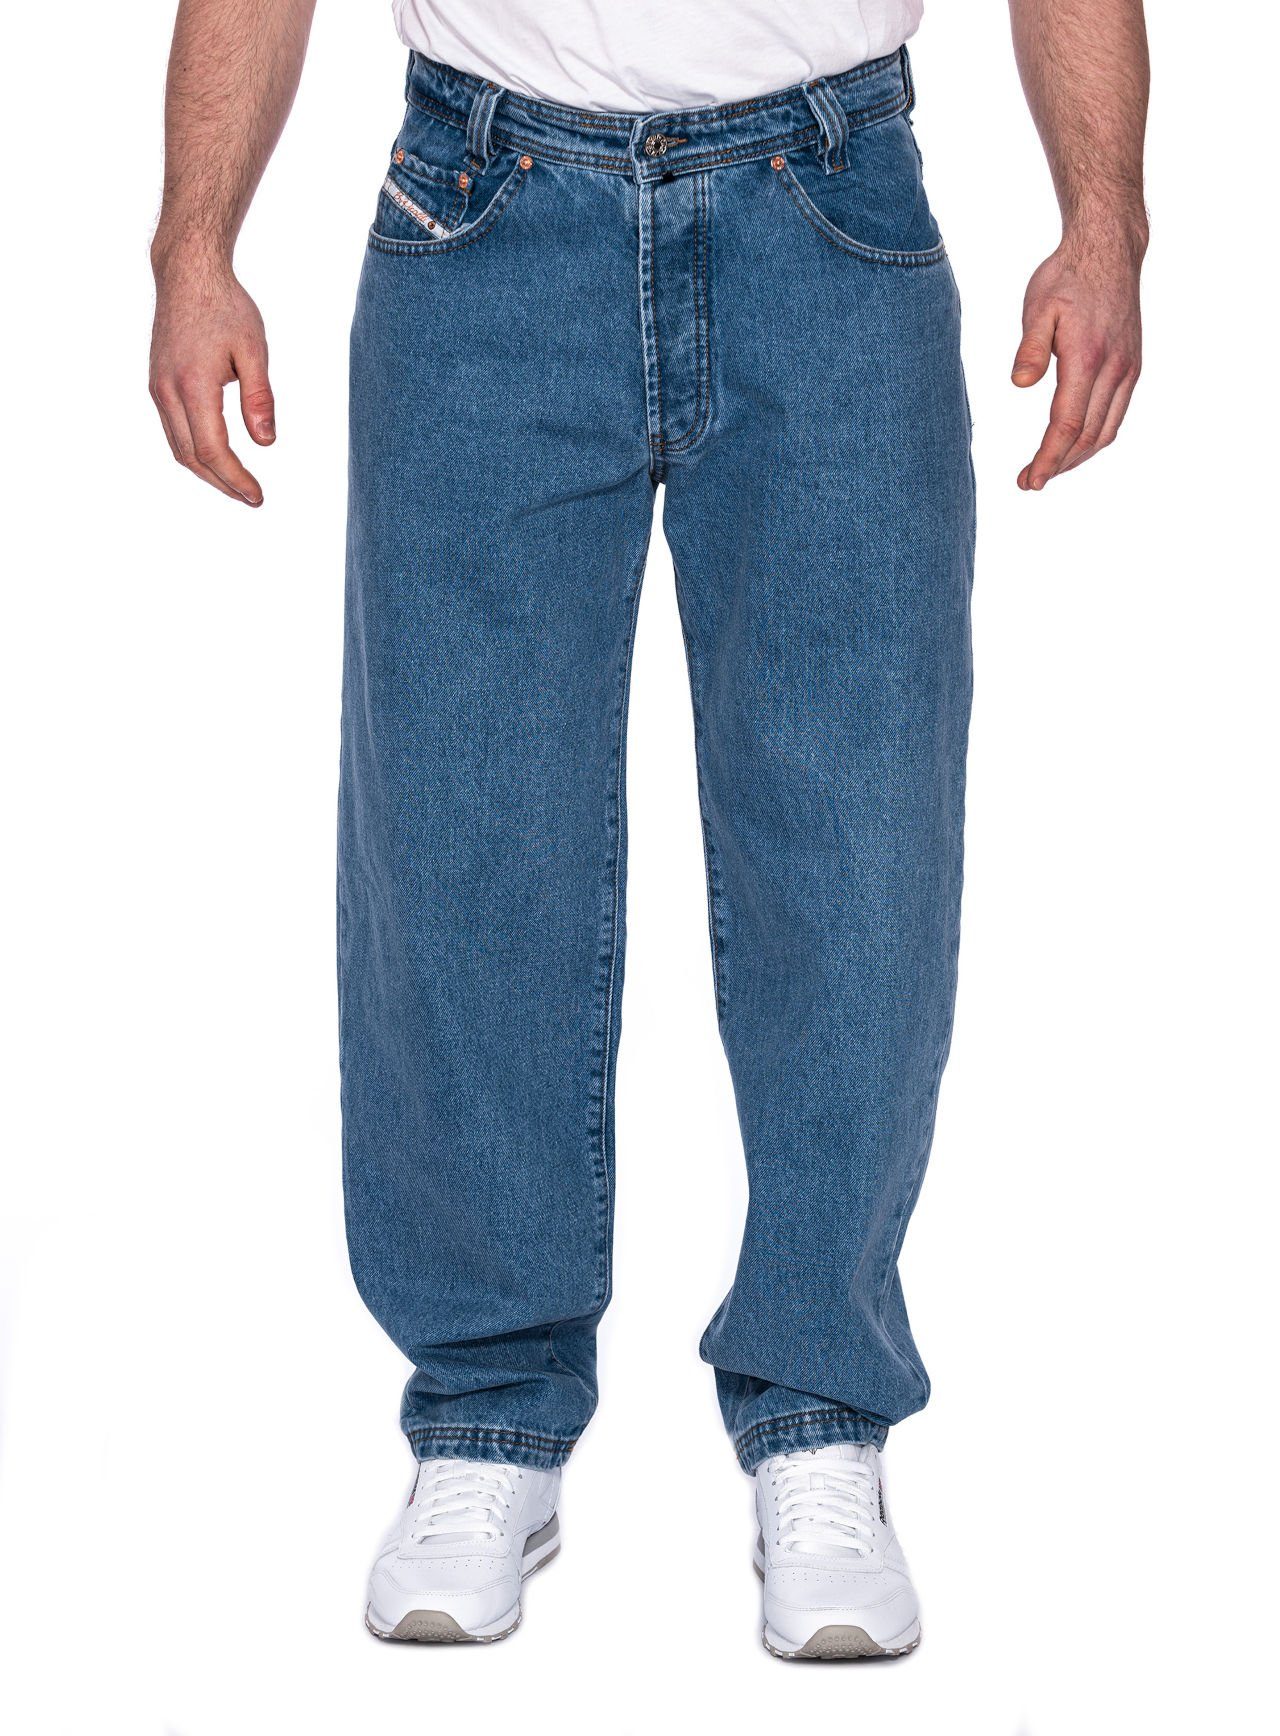 Jeans Loose Zicco 471 PICALDI Detroit Pocket Five Fit, Jeans Jeans Weite